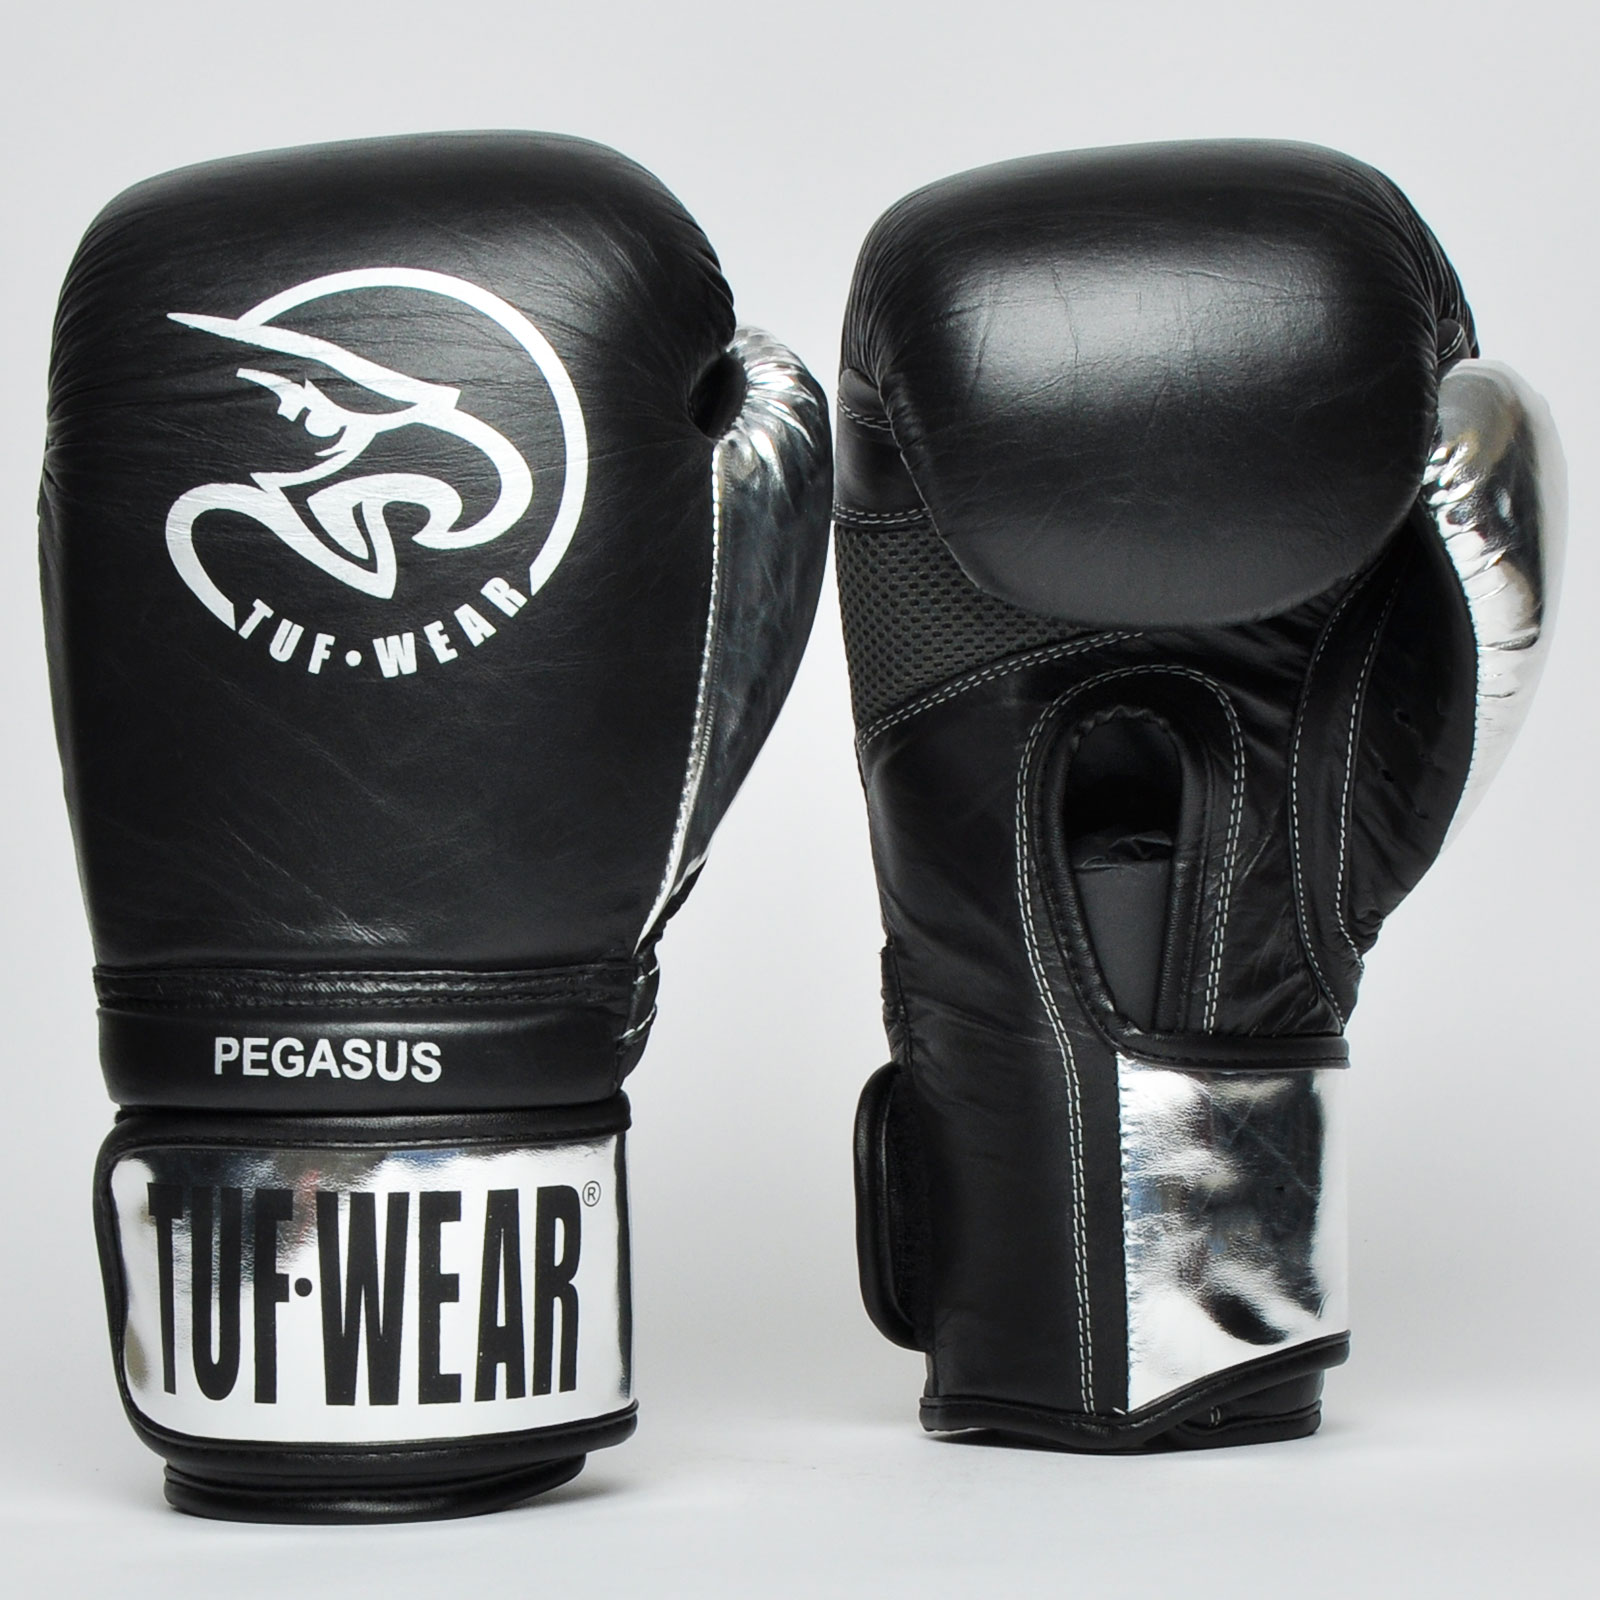 Tufwear Boxing Gloves Leather Pegasus Training Glove Black Silver